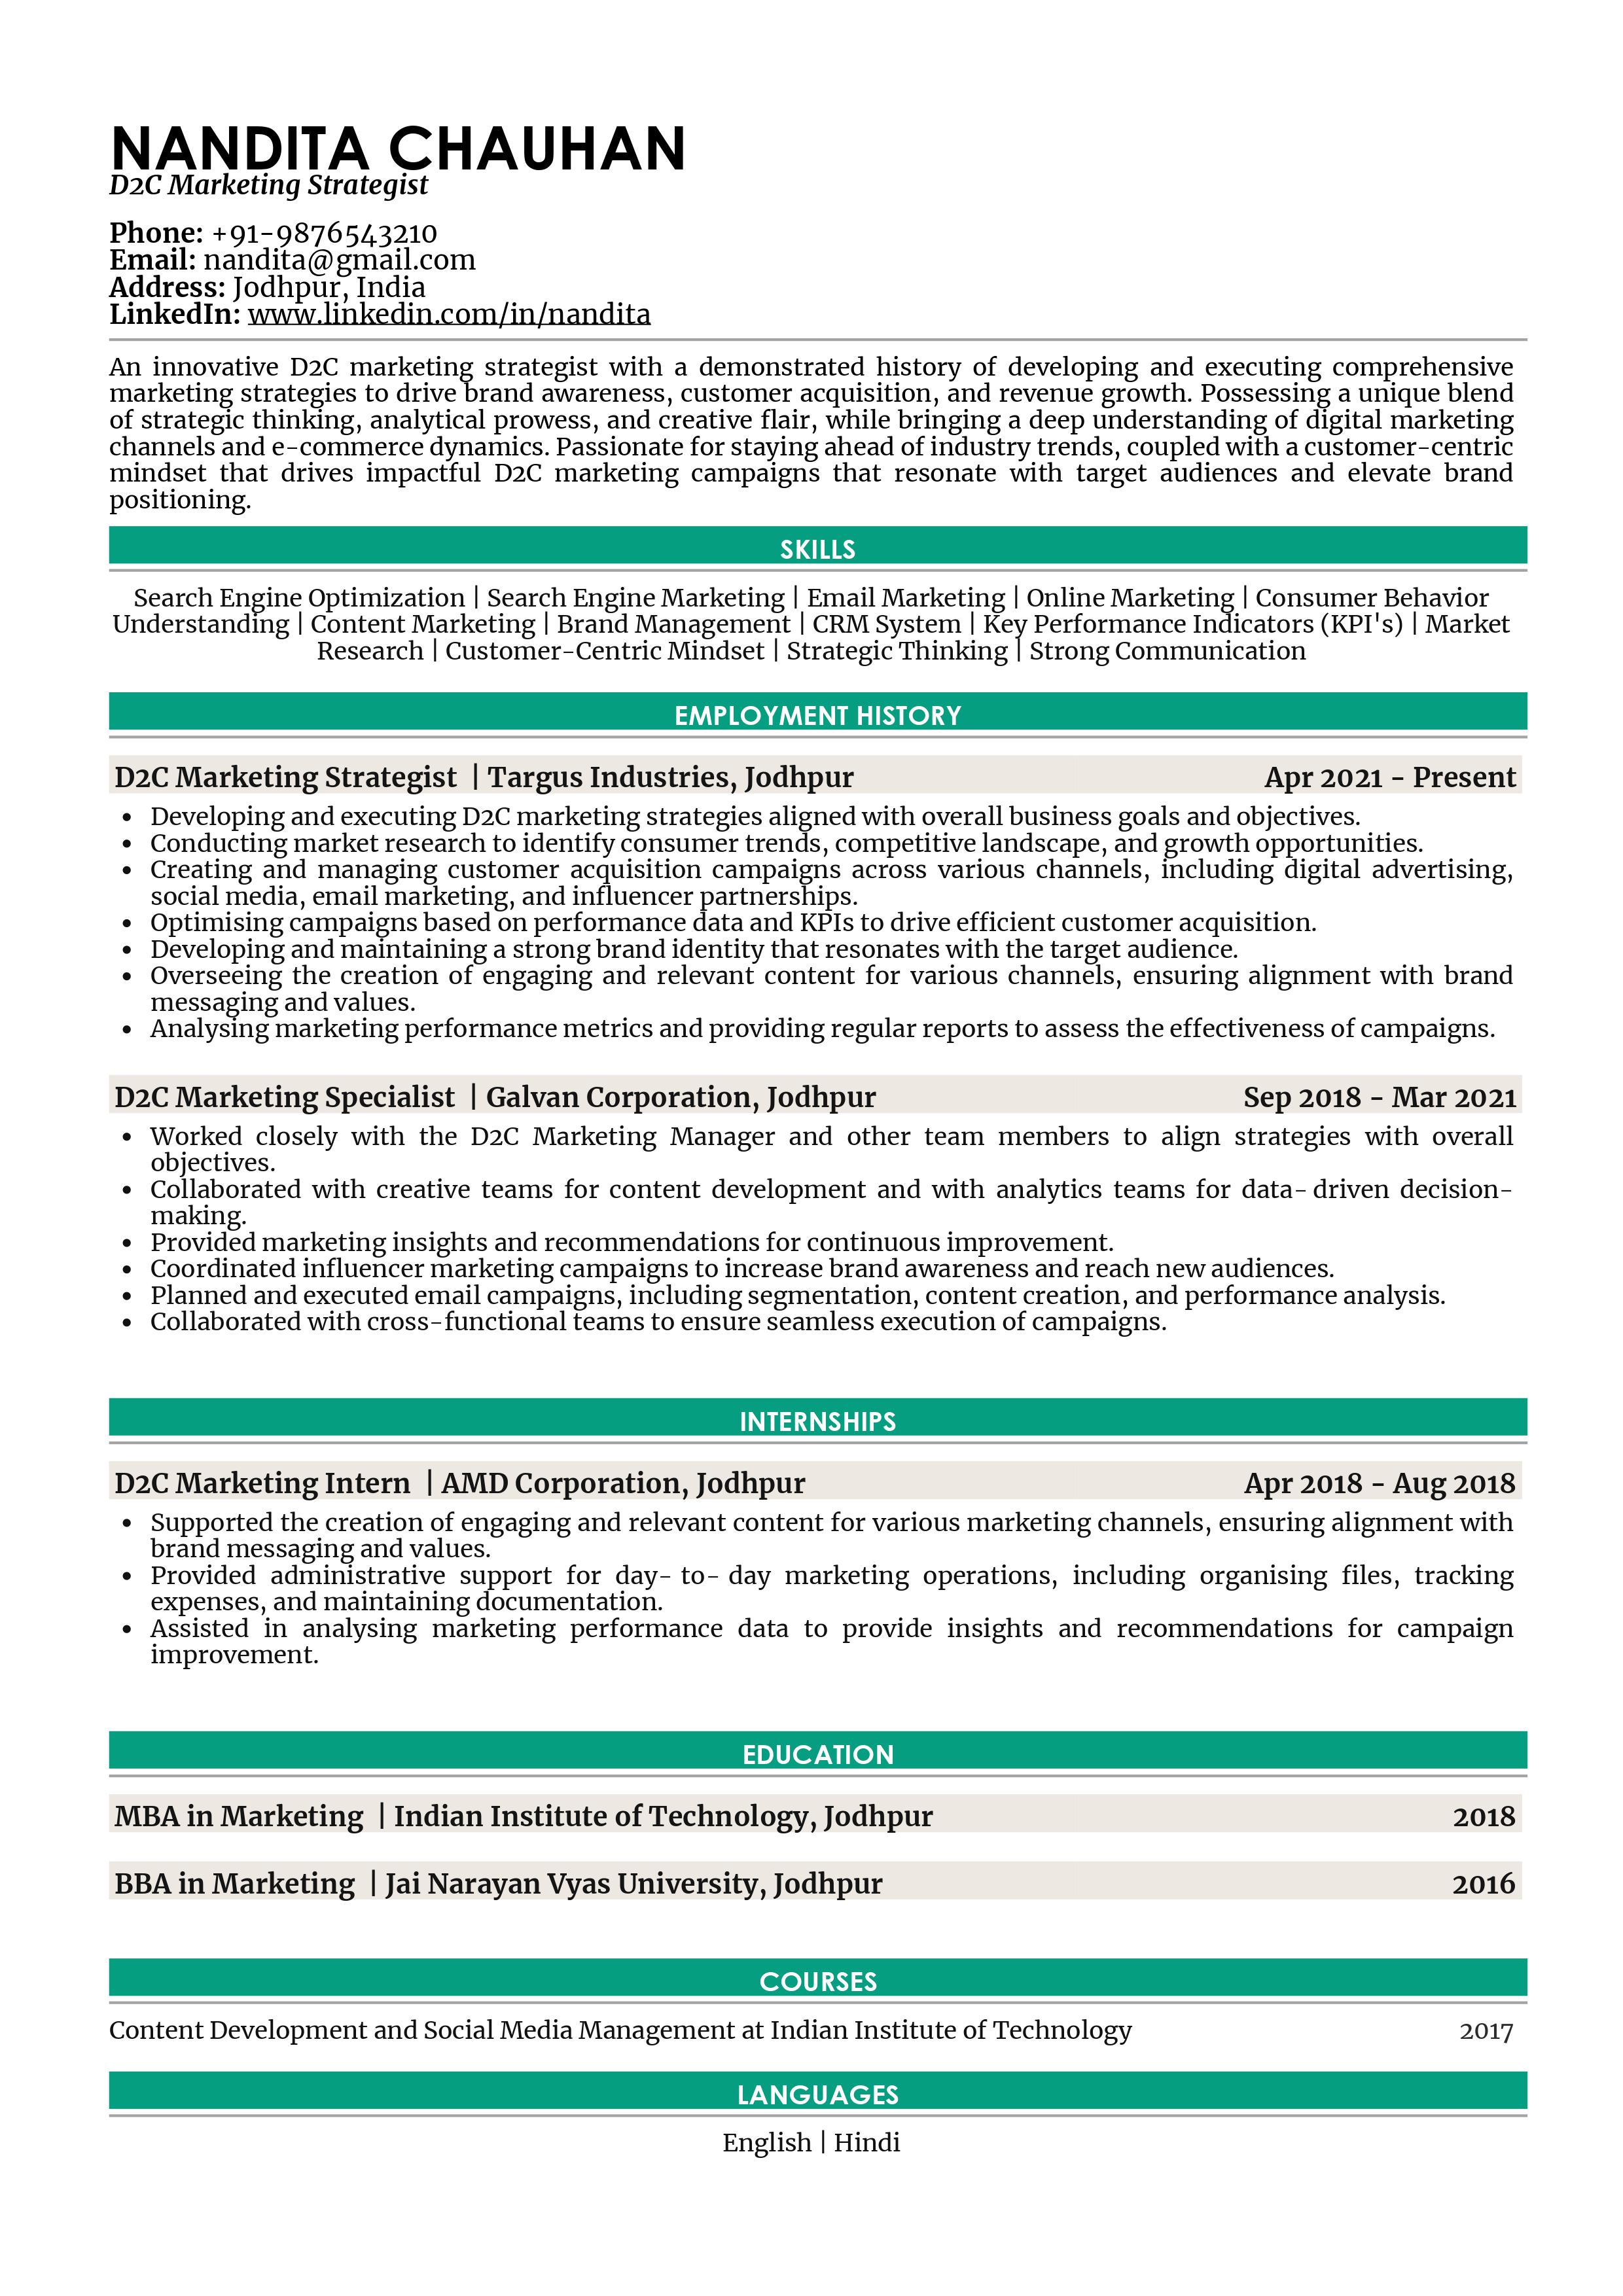 Sample Resume of D2C Marketing Strategist | Free Resume Templates & Samples on Resumod.co